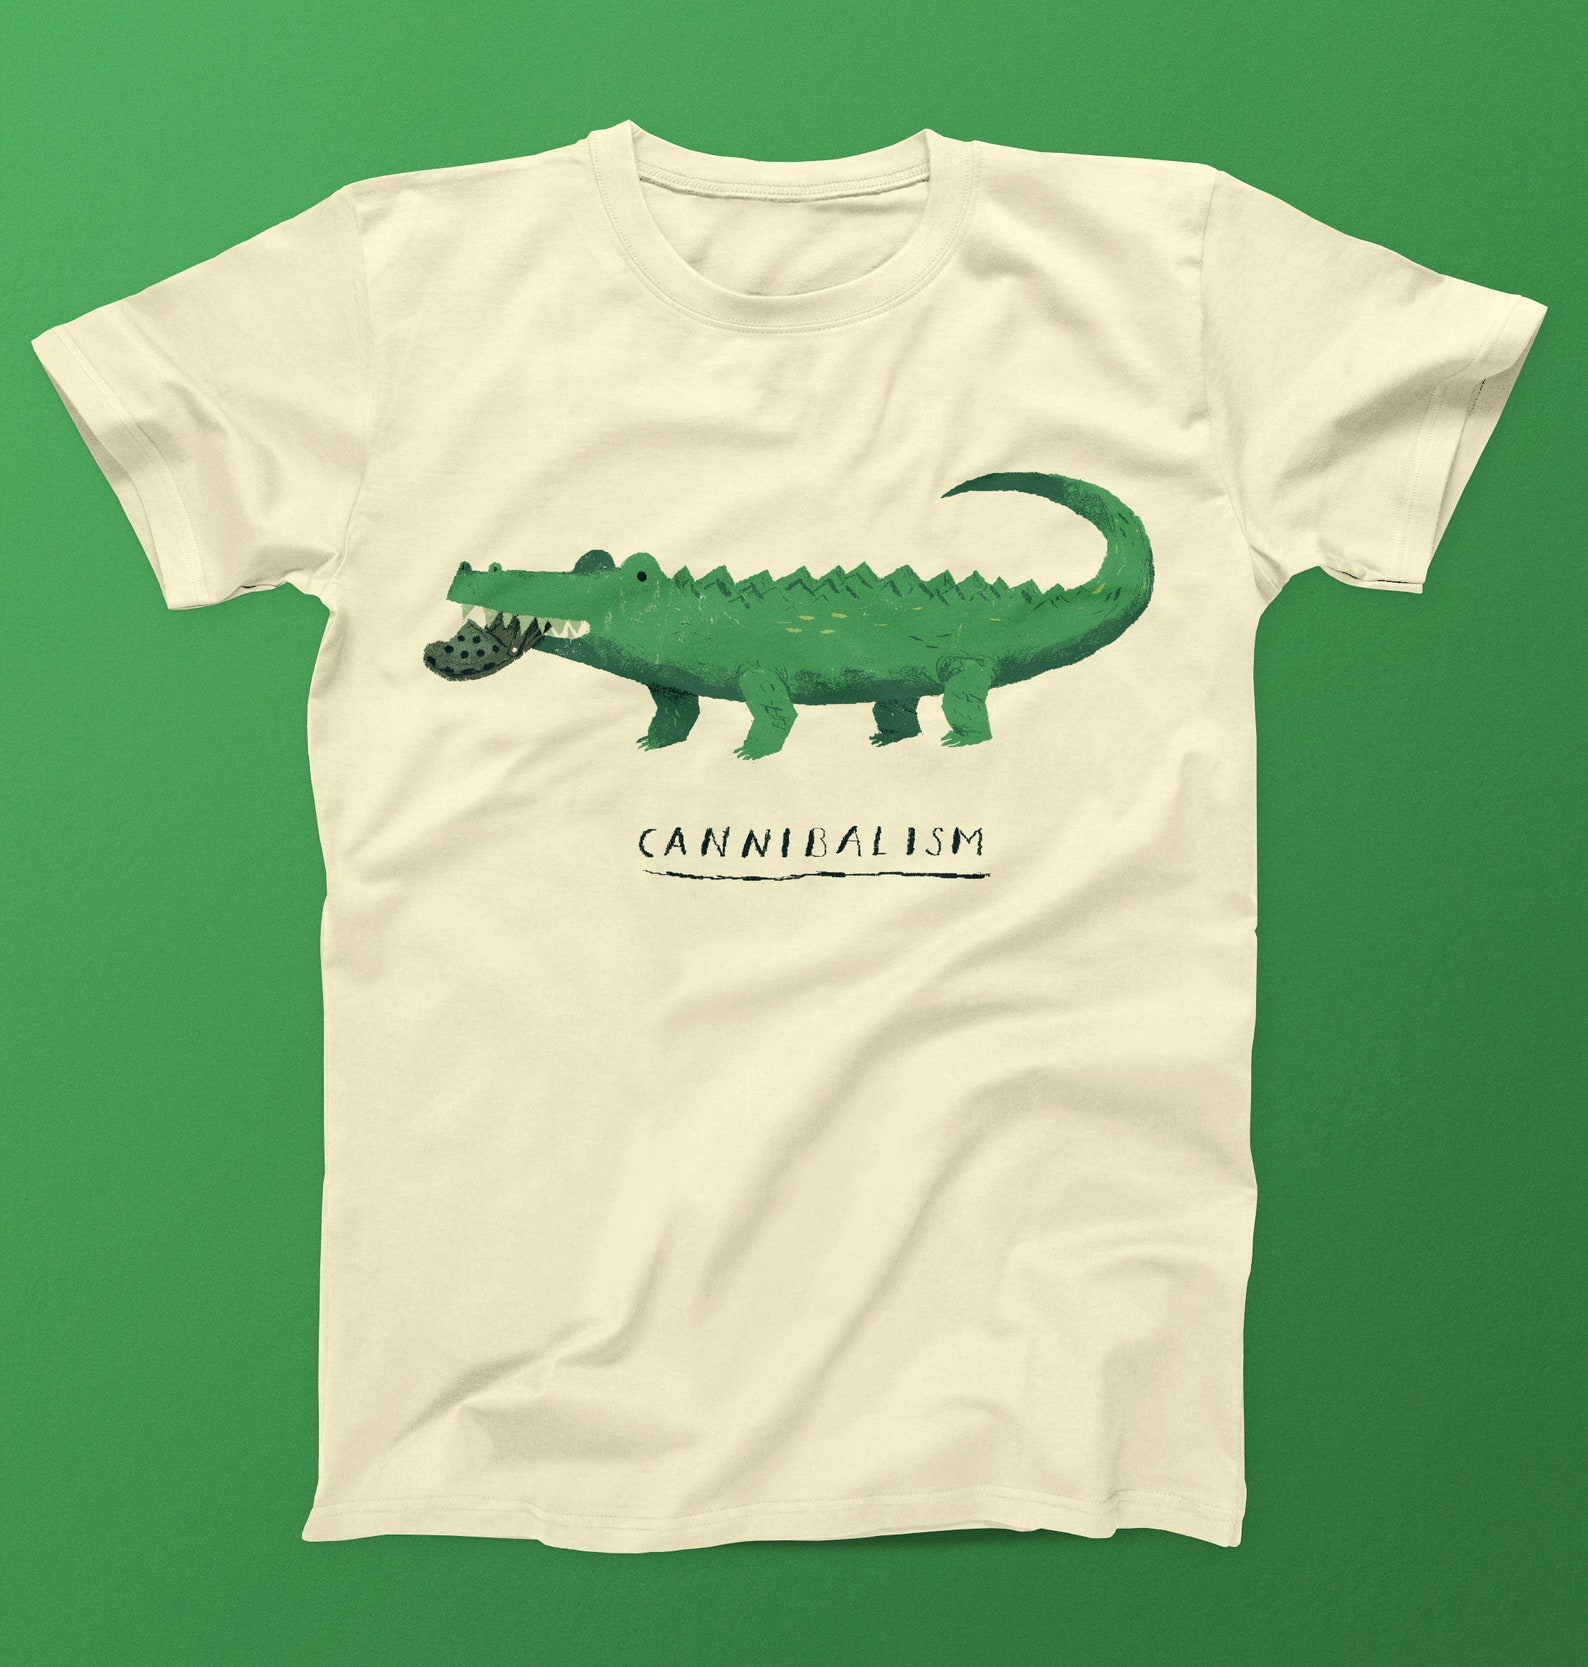 Croc cannibalism crocodile T-shirt/ funny croc shirt / cute | Etsy